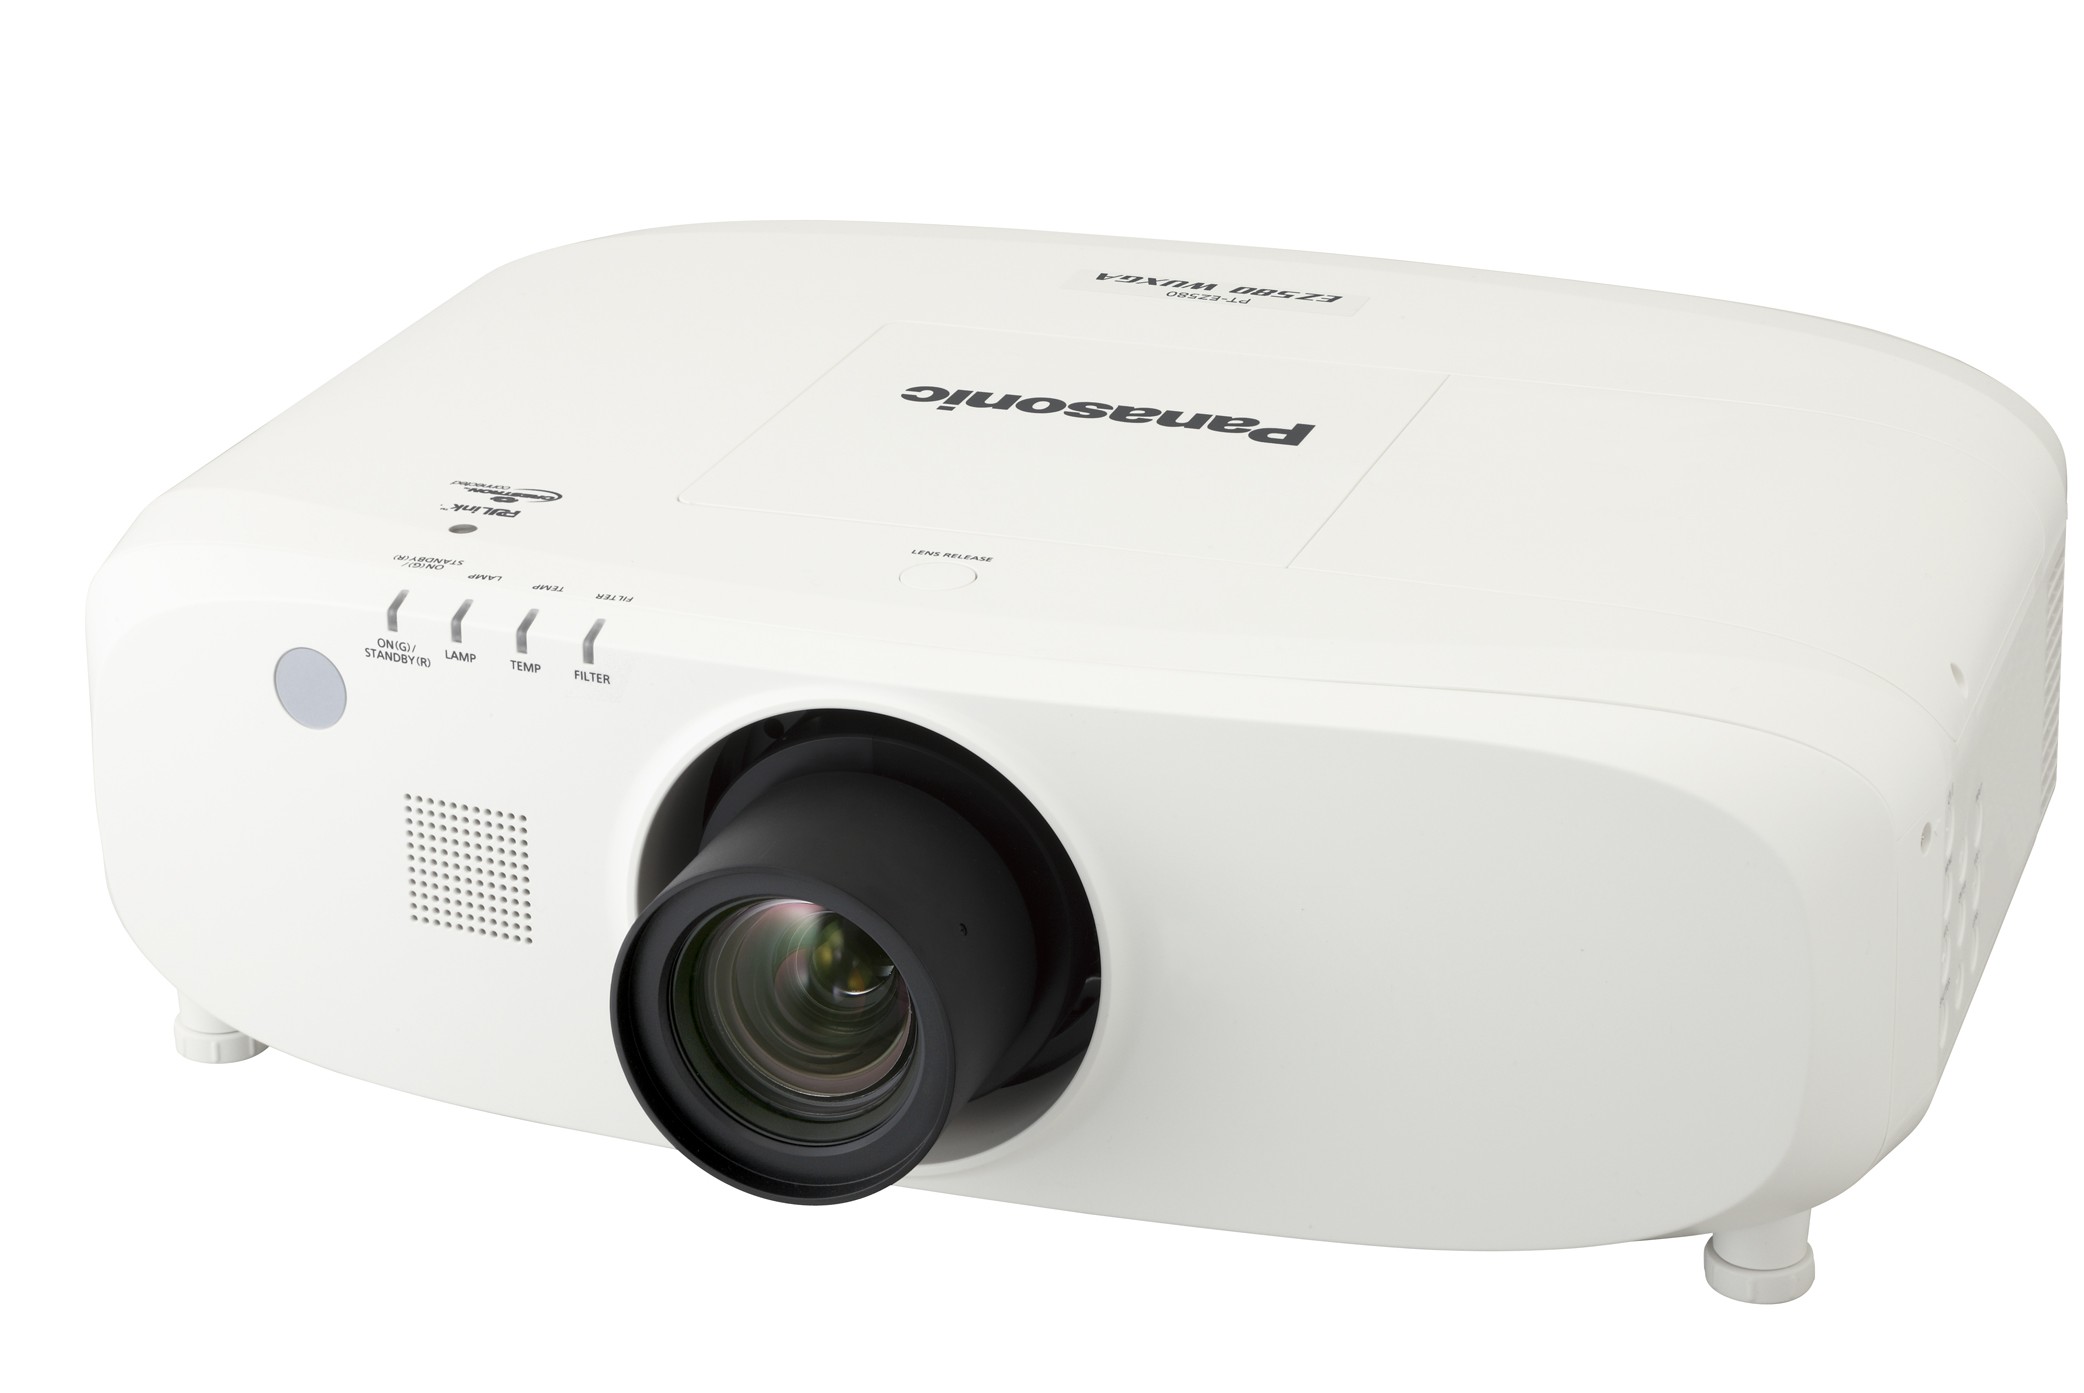 Panasonic launches 'quiet' LCD projector range